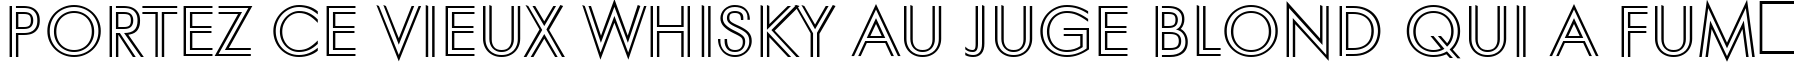 Пример написания шрифтом a_FuturaOrtoTitulInln текста на французском